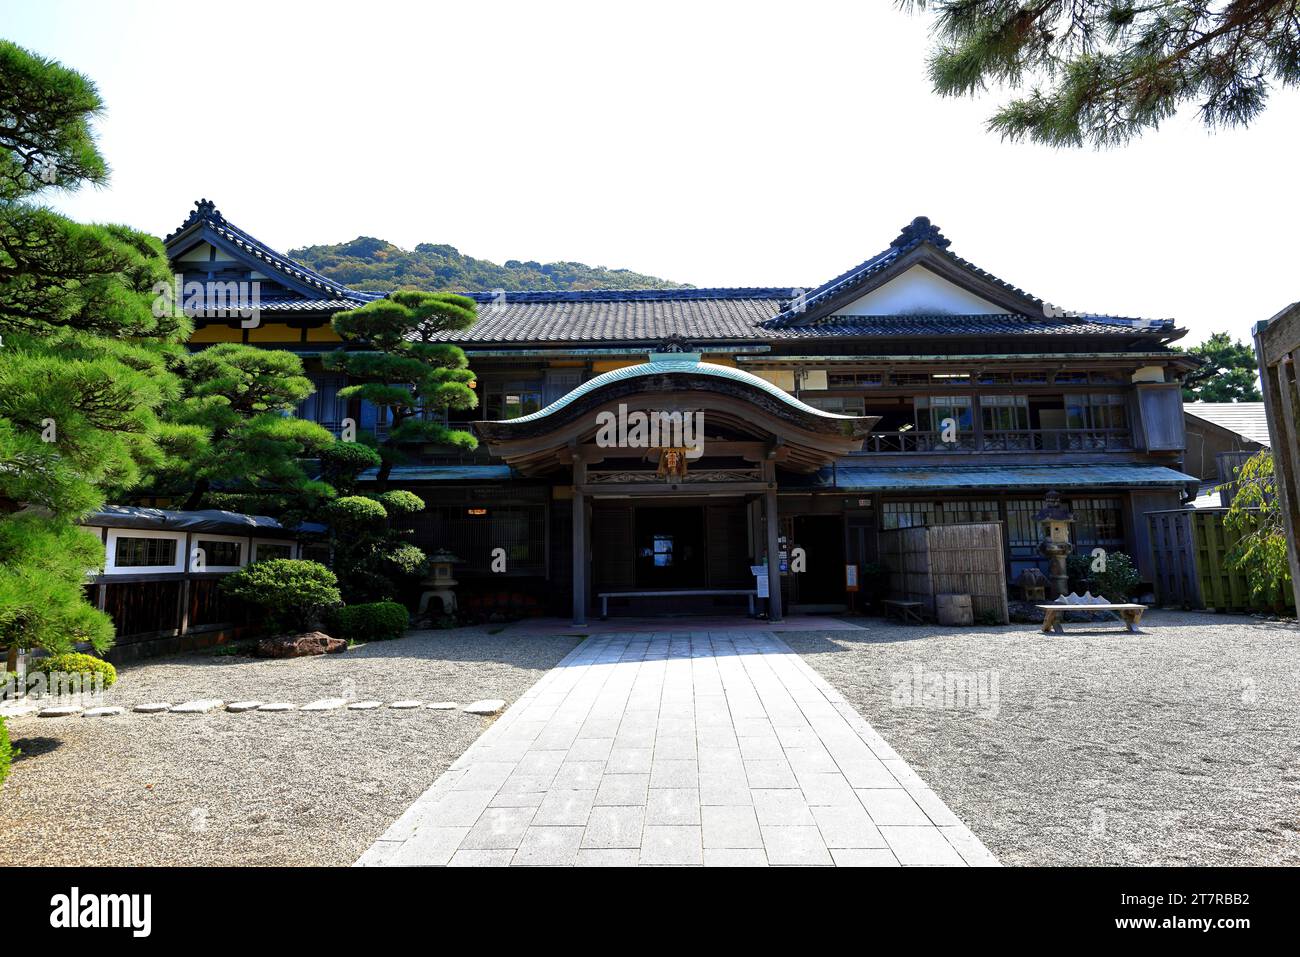 Traditional building near Futamiokitama Shrine and Sacred Meoto Iwa (Wedded Rocks) at Futami, Mie Prefecture, Japan Stock Photo